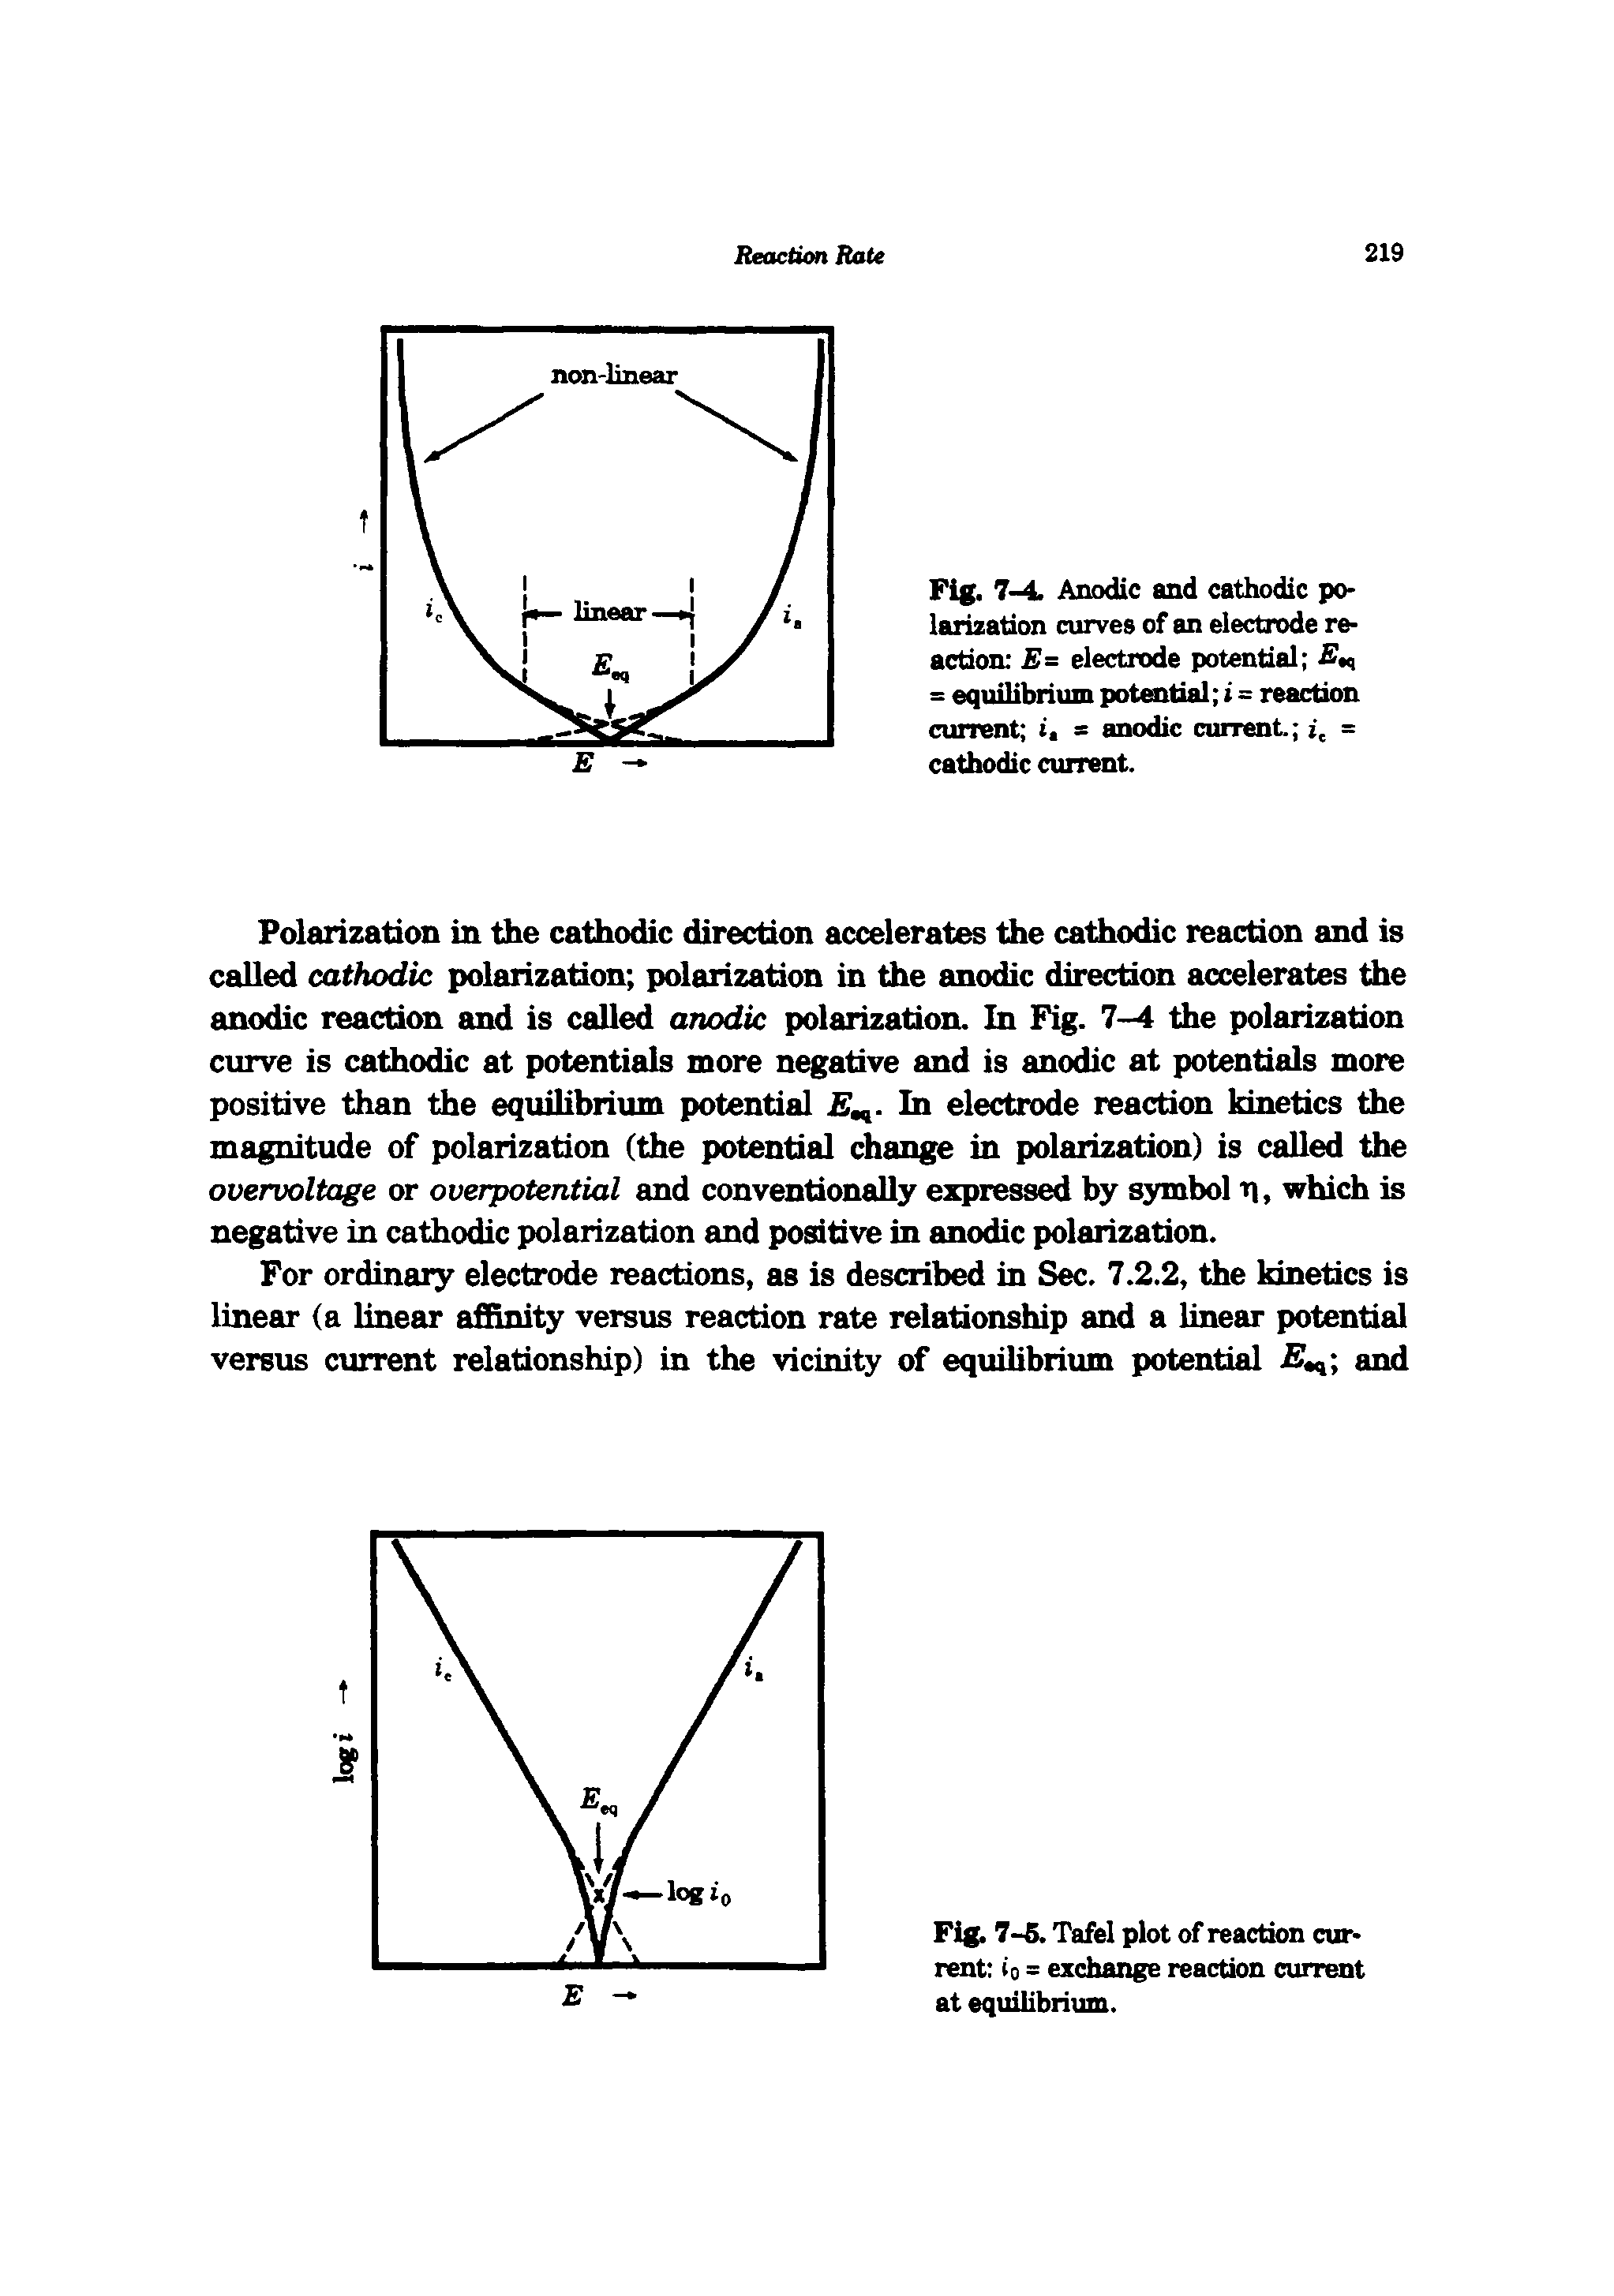 Fig. 7-5. Tafel plot of reaction current io = exchange reaction current at equilibrium.